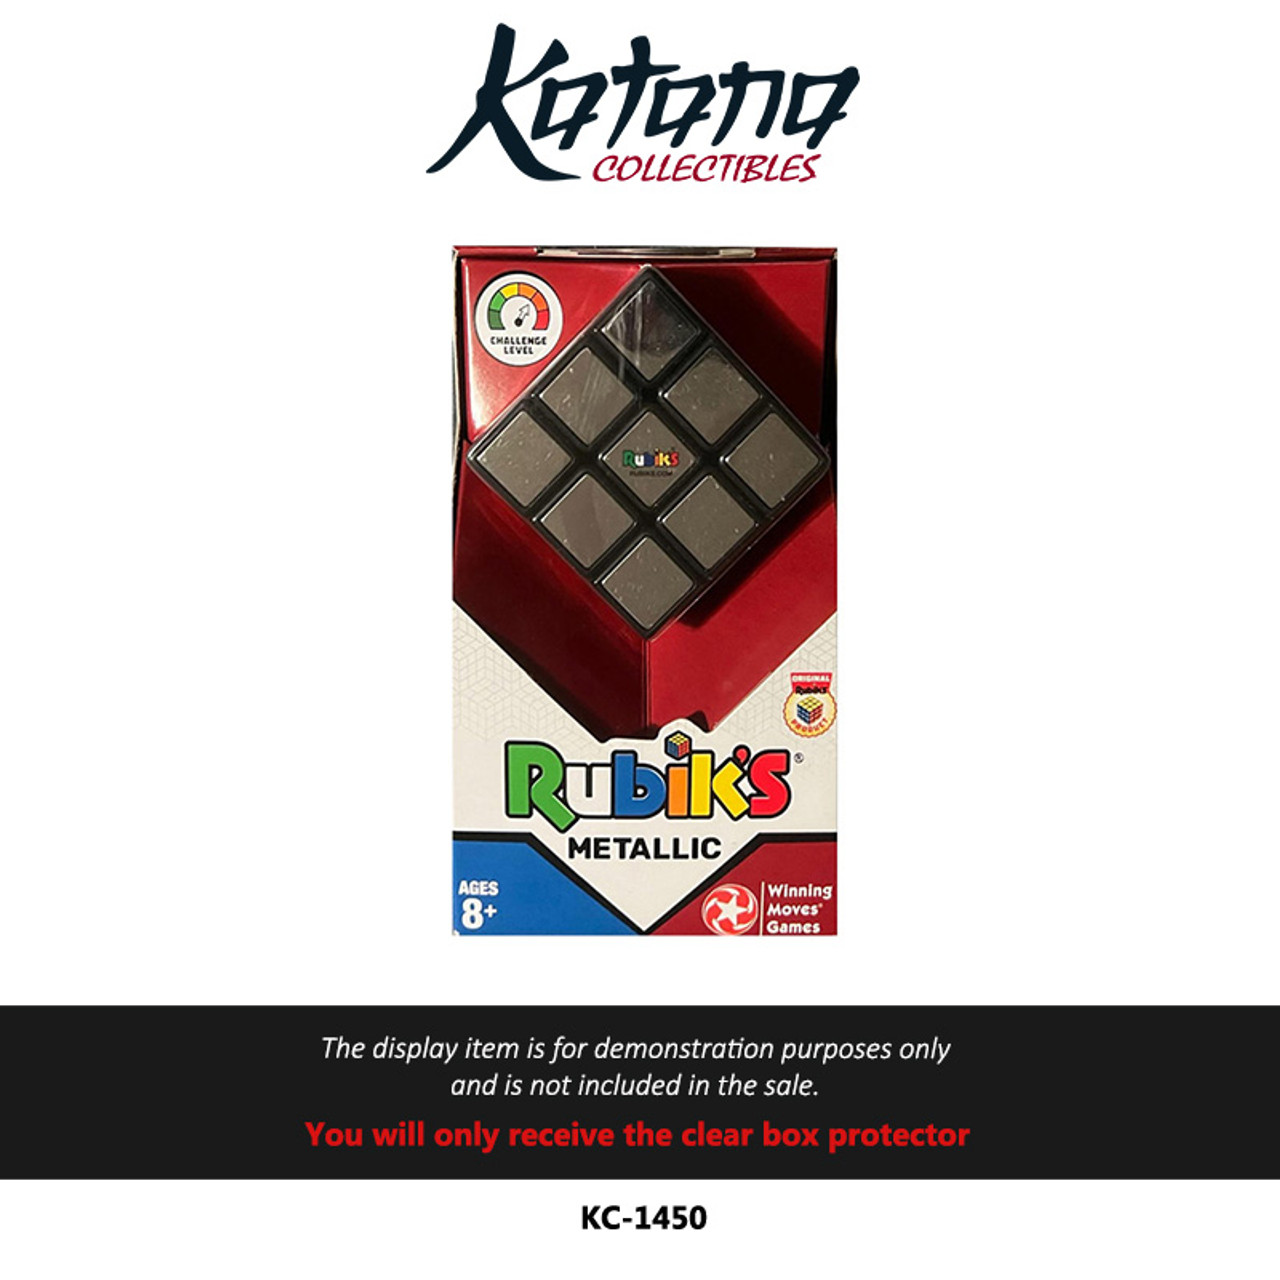 Katana Collectibles Protector For Rubiks Cube Metallic